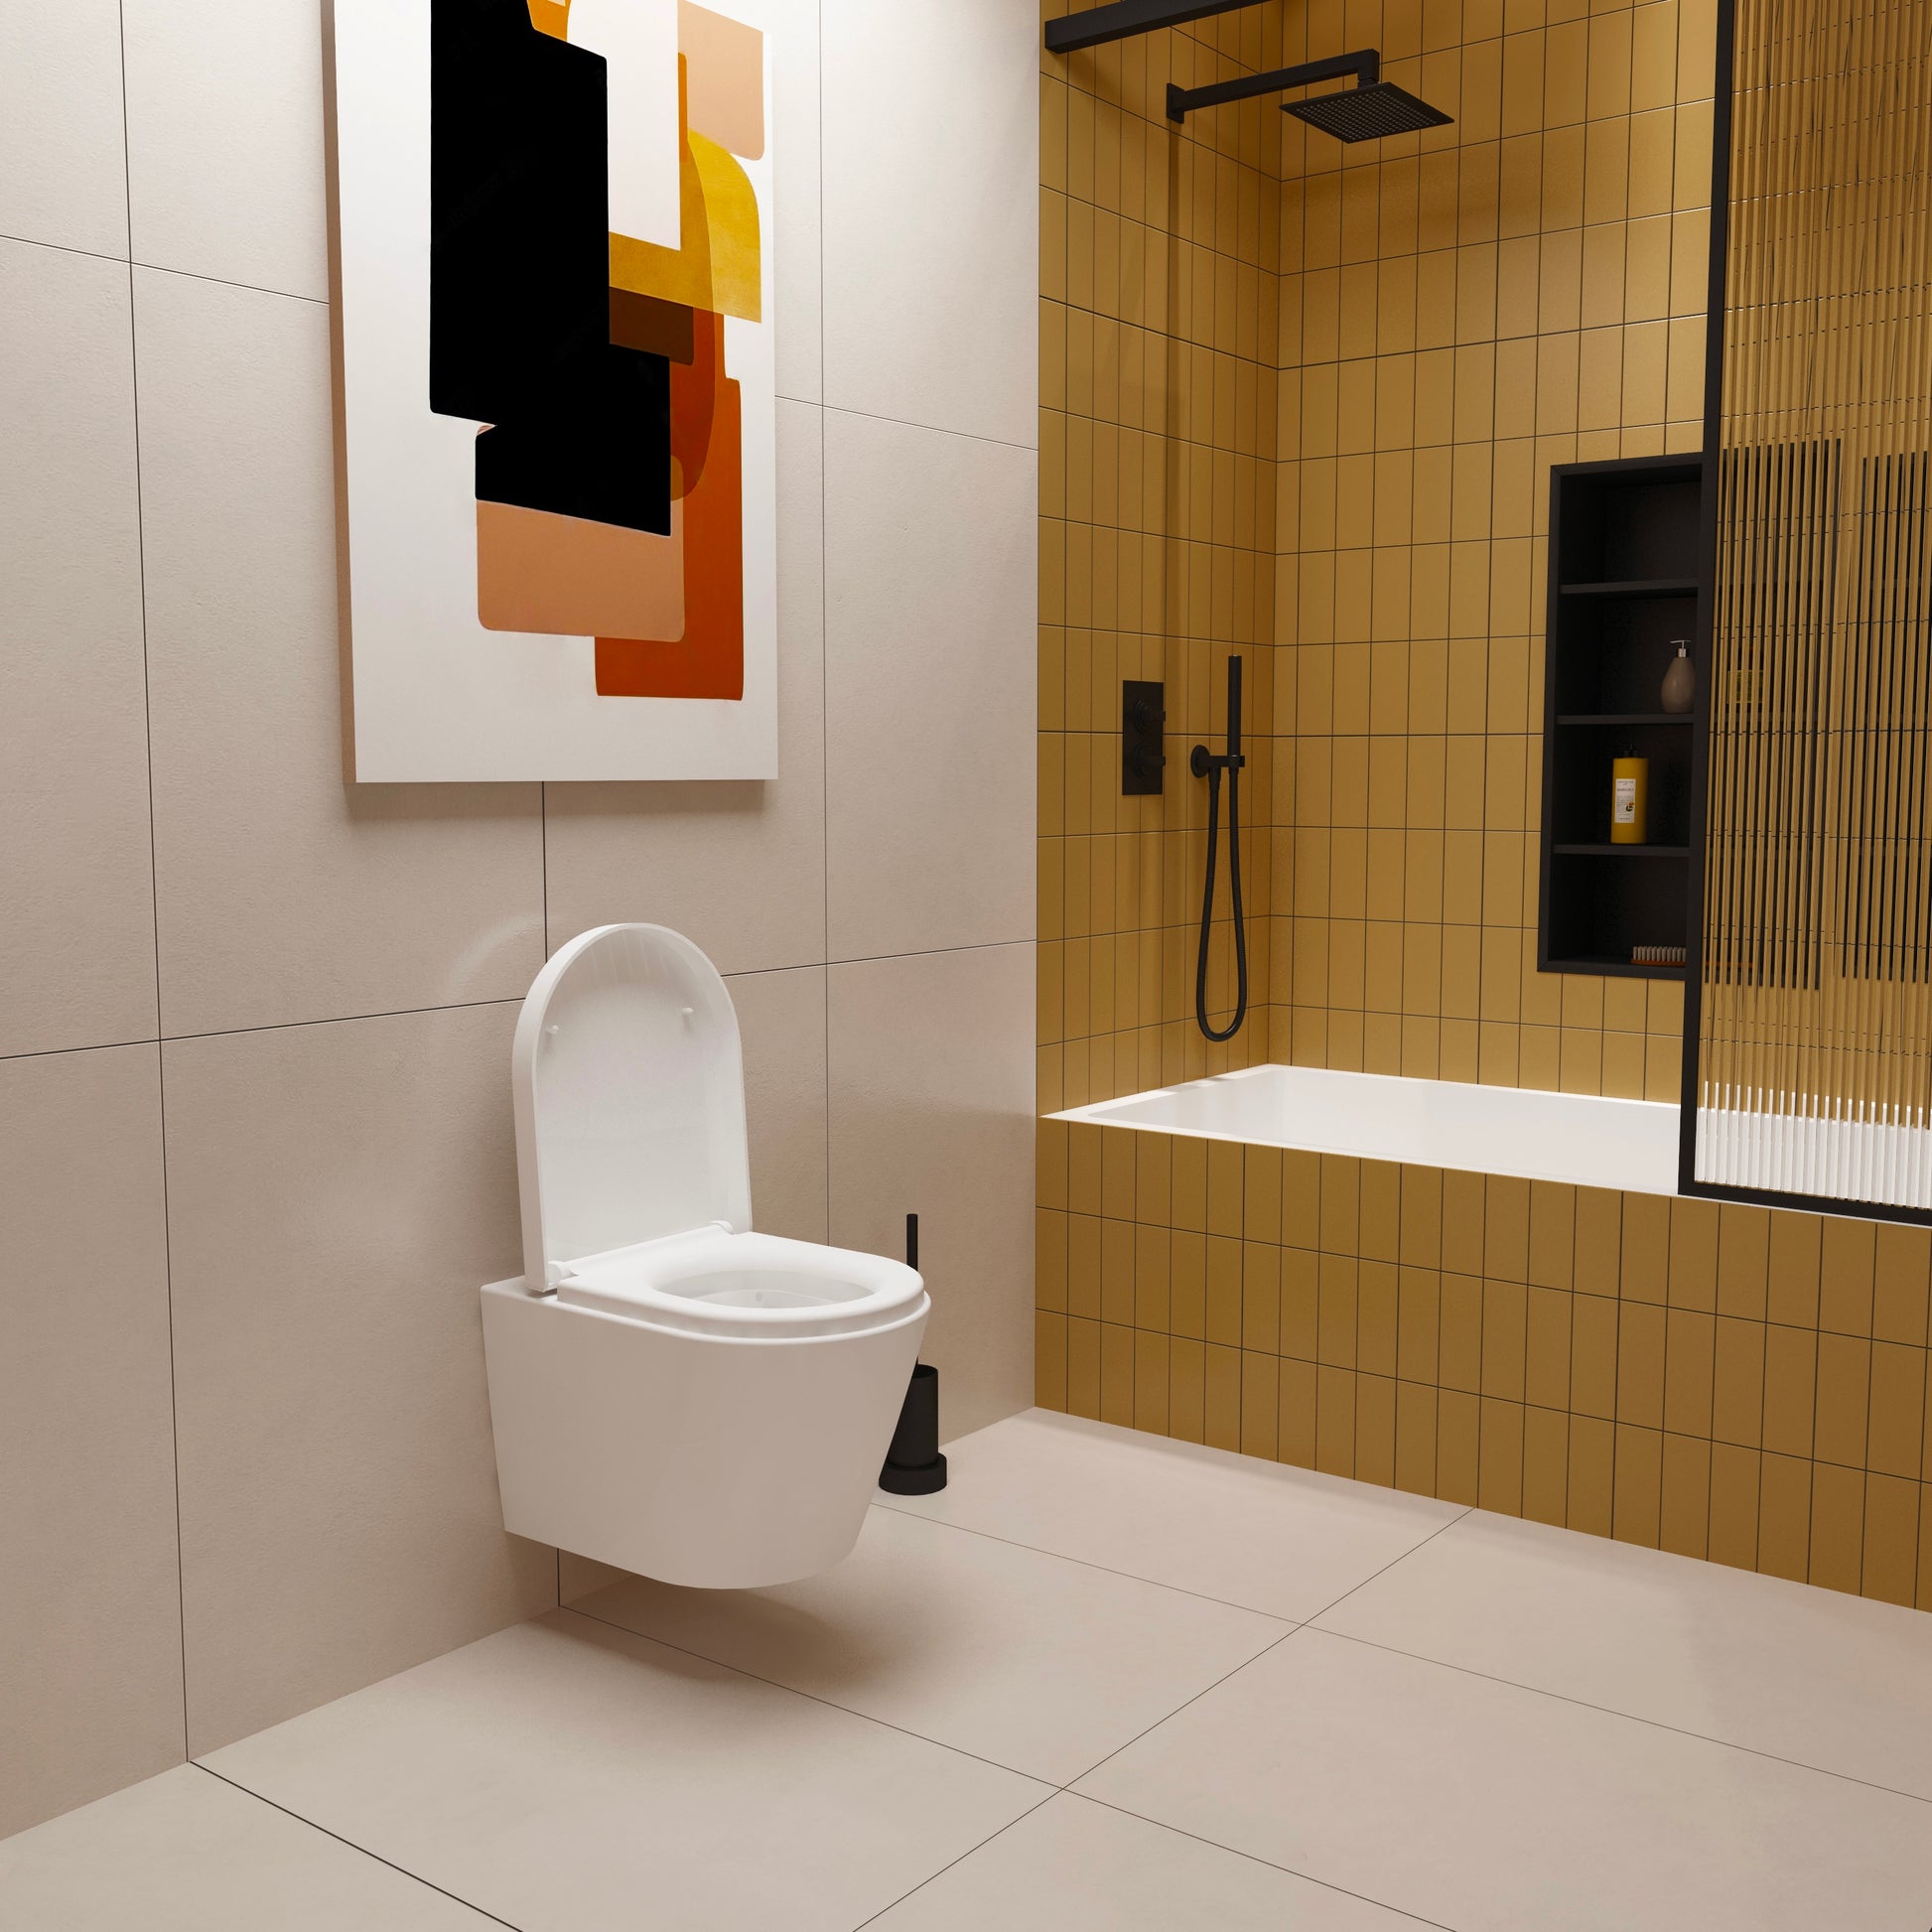 AICA Bathroom Rimless Wall Hung Toilet Soft Close Seat WC White Cerami